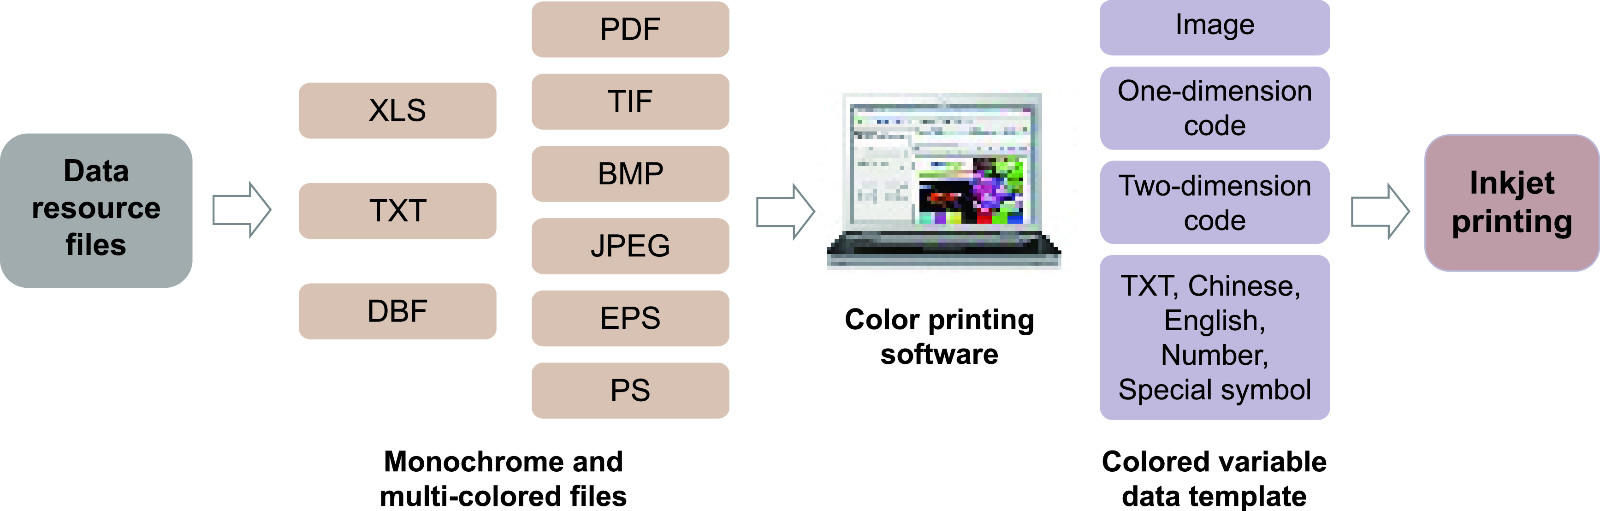 printing coding printer series for film